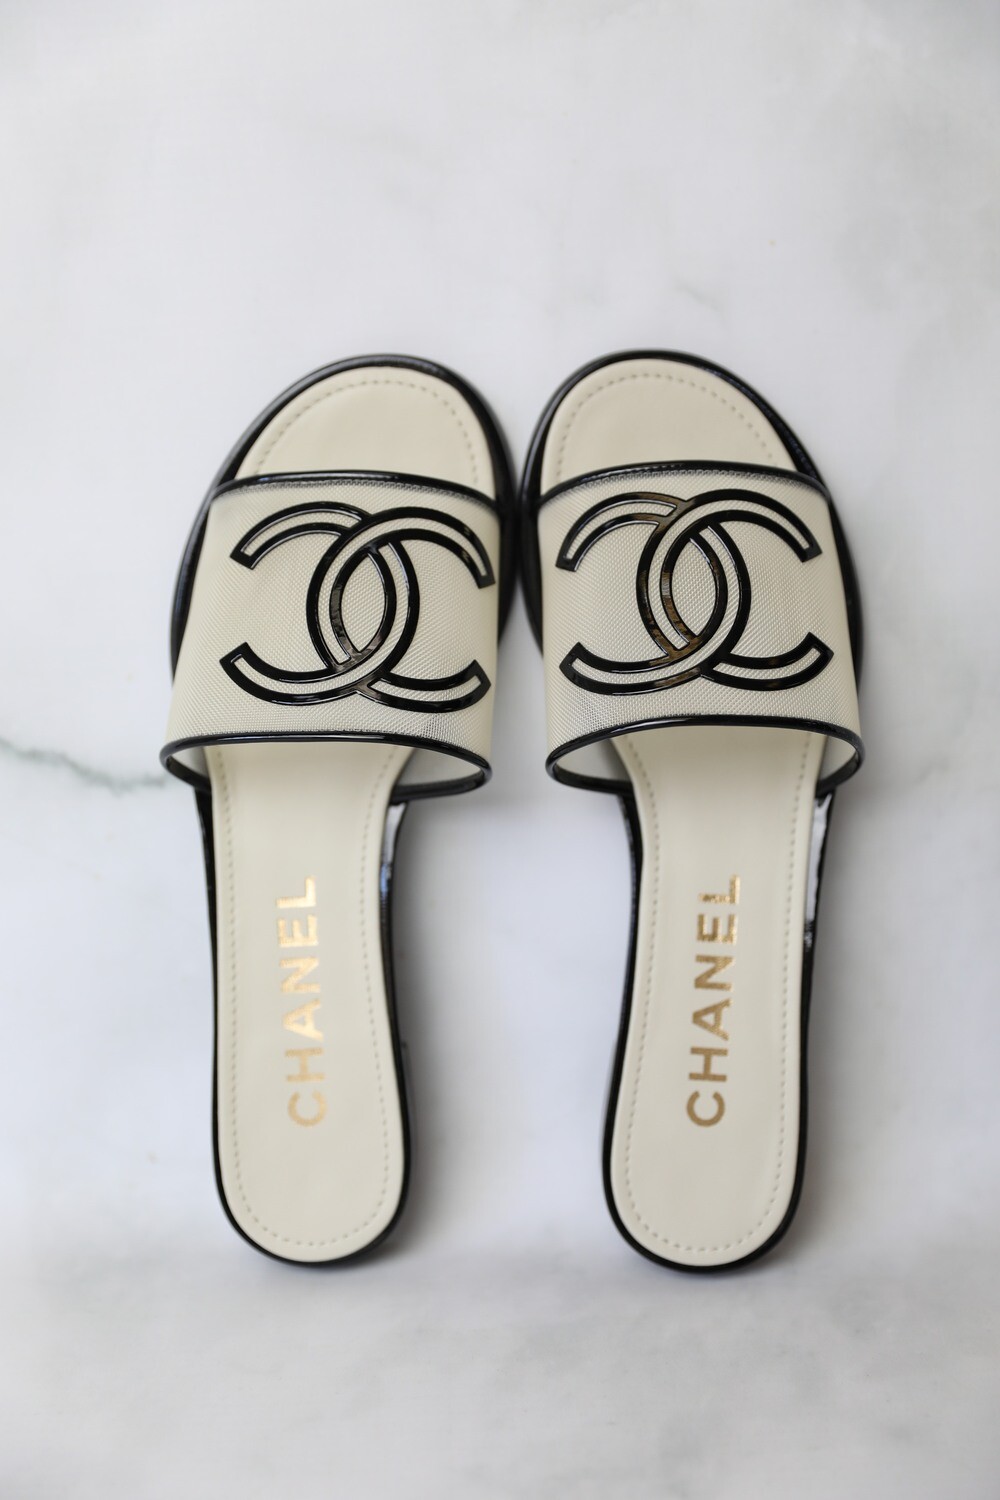 Chanel Slide Sandals, White Mesh, Size 36.5, New in Box WA001